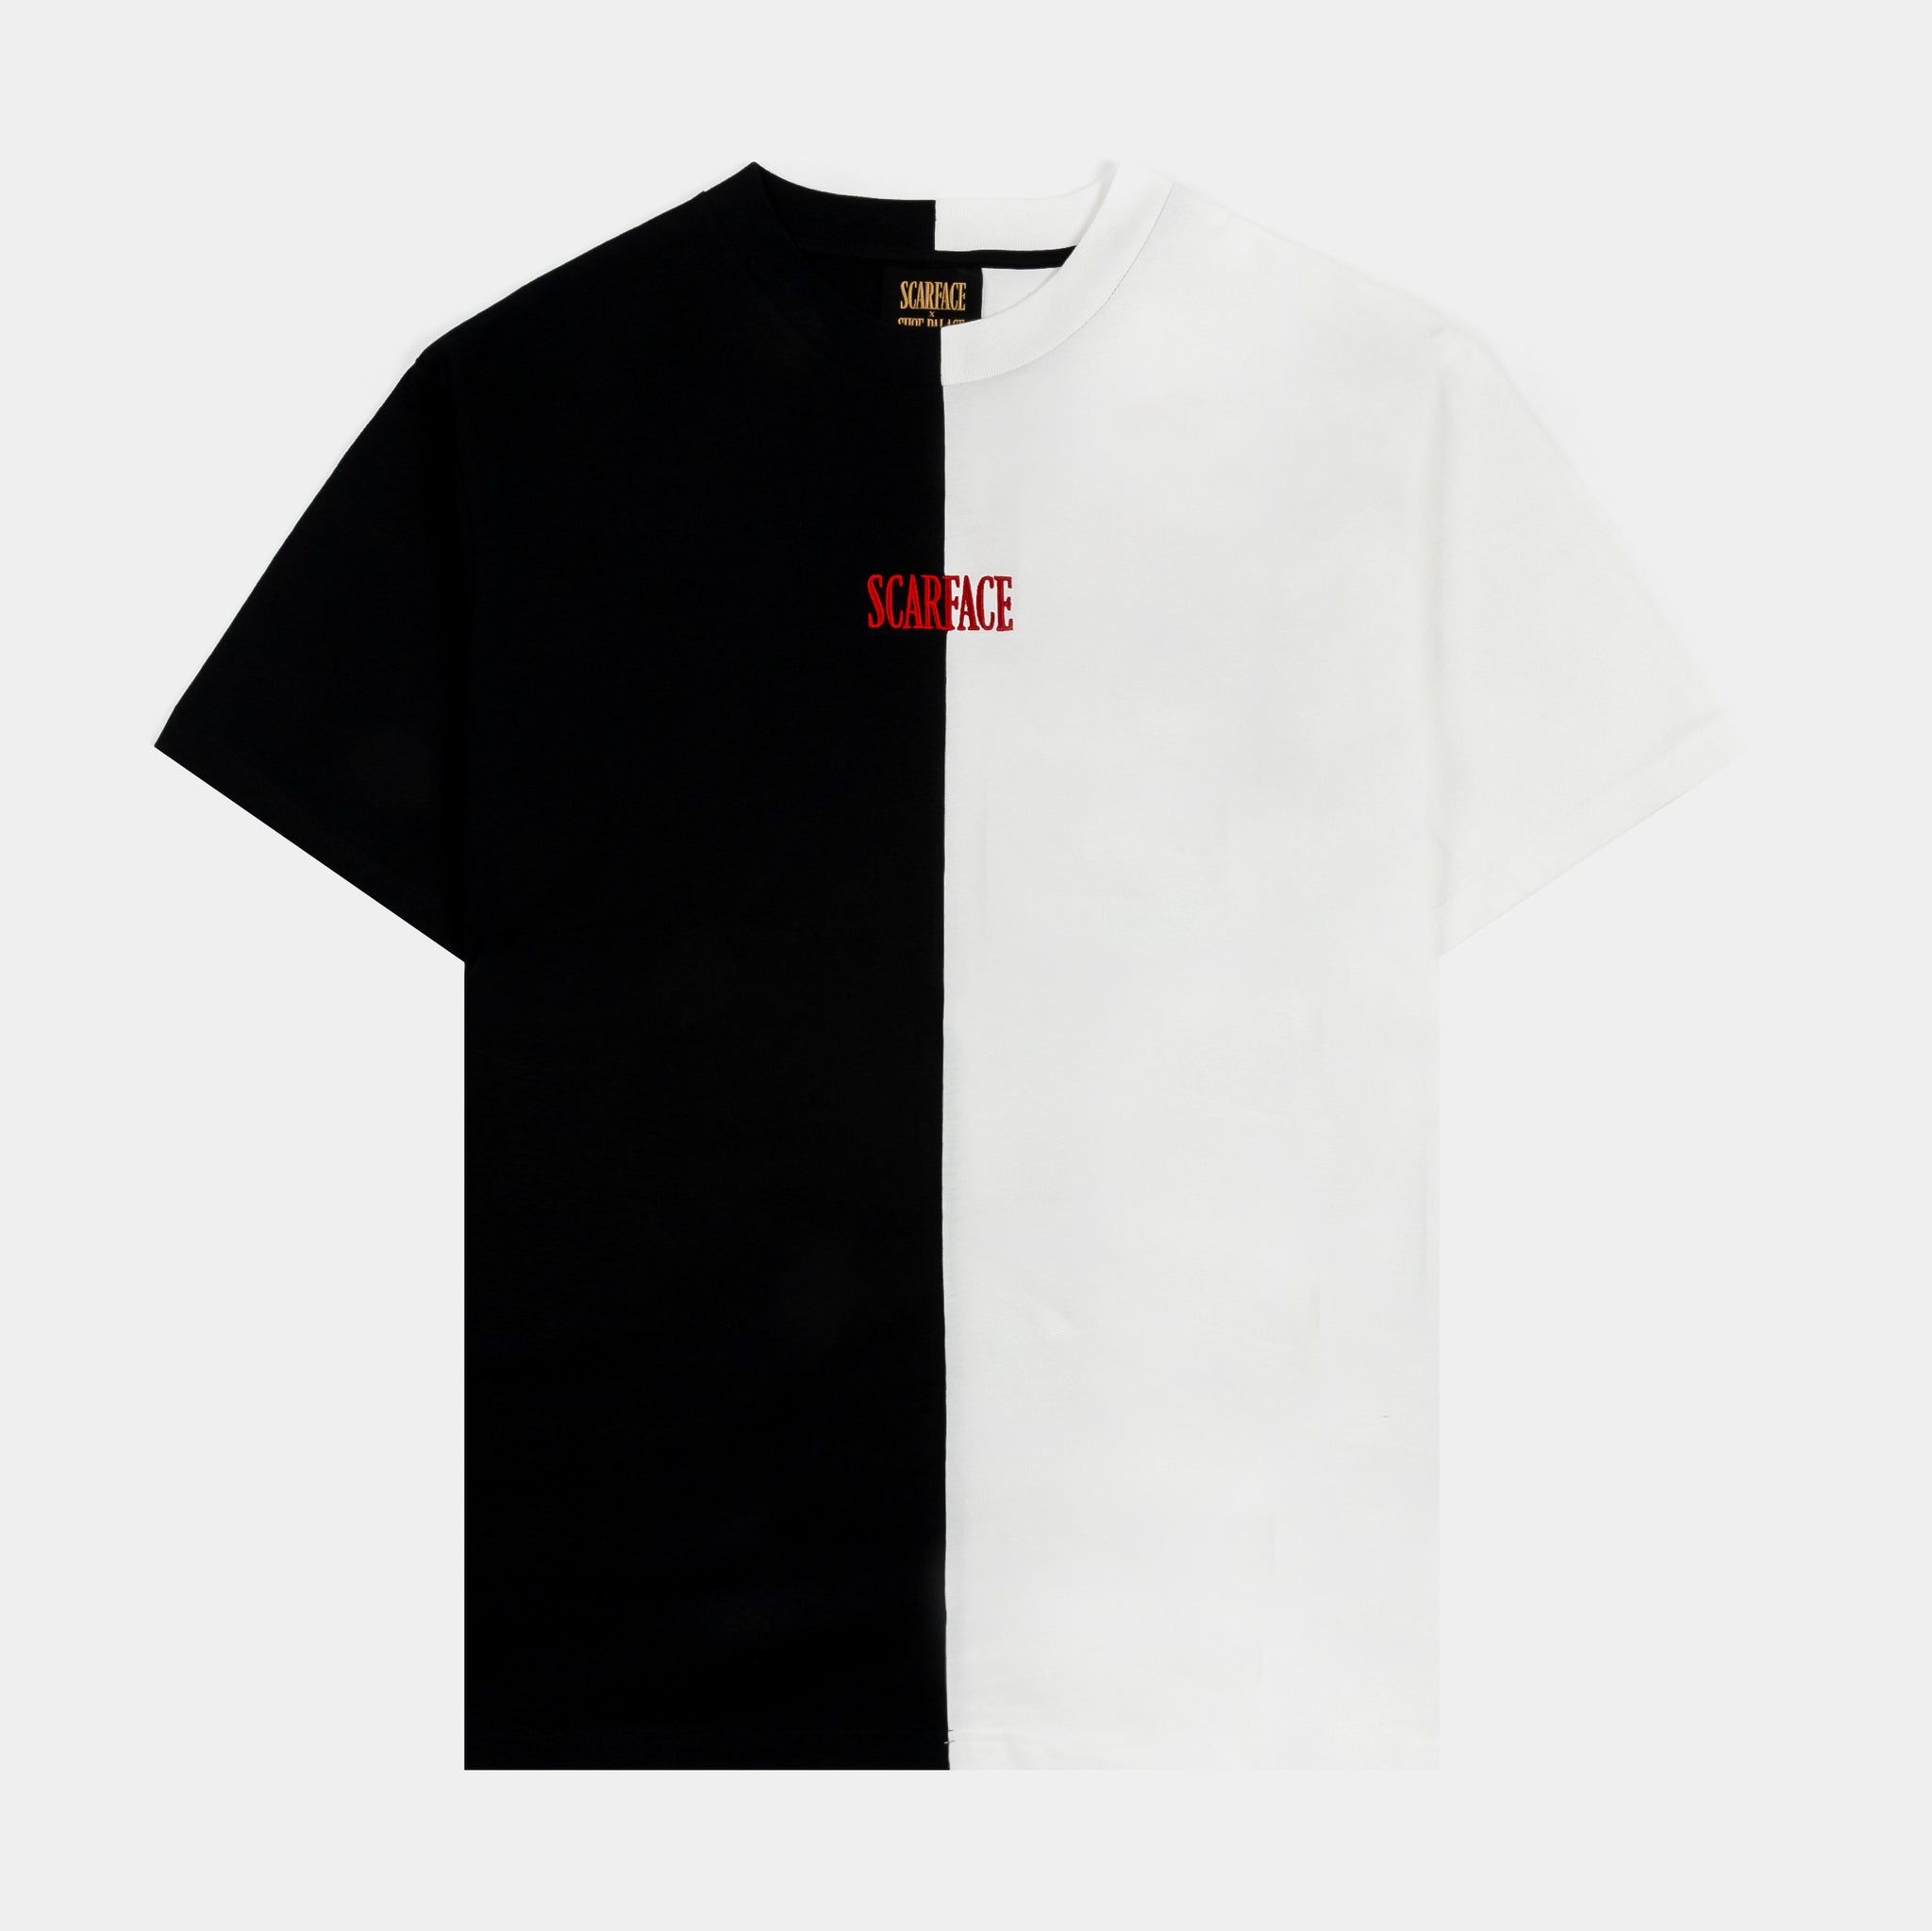 SP x Scarface Counting Money Split Mens Short Sleeve Shirt (Black/White)